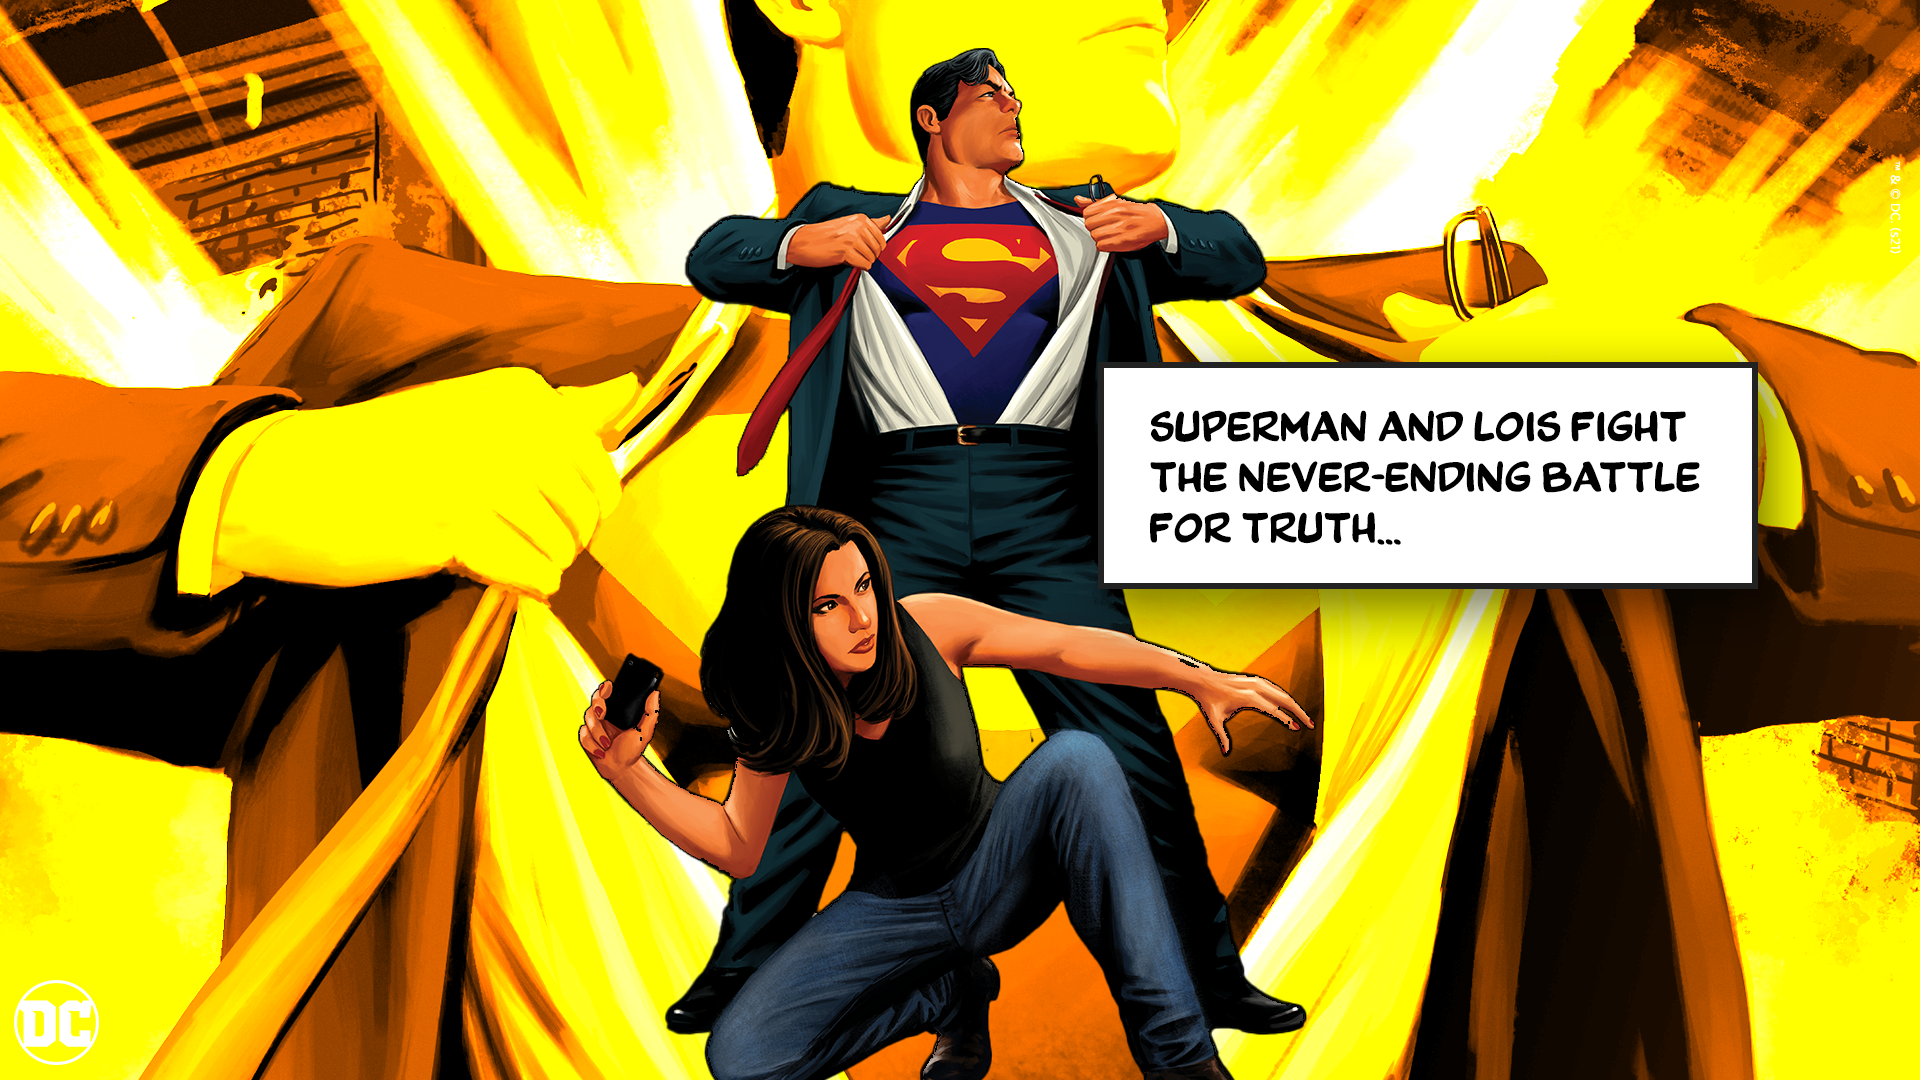 DCComics_Superman&Lois101_35_v1.png